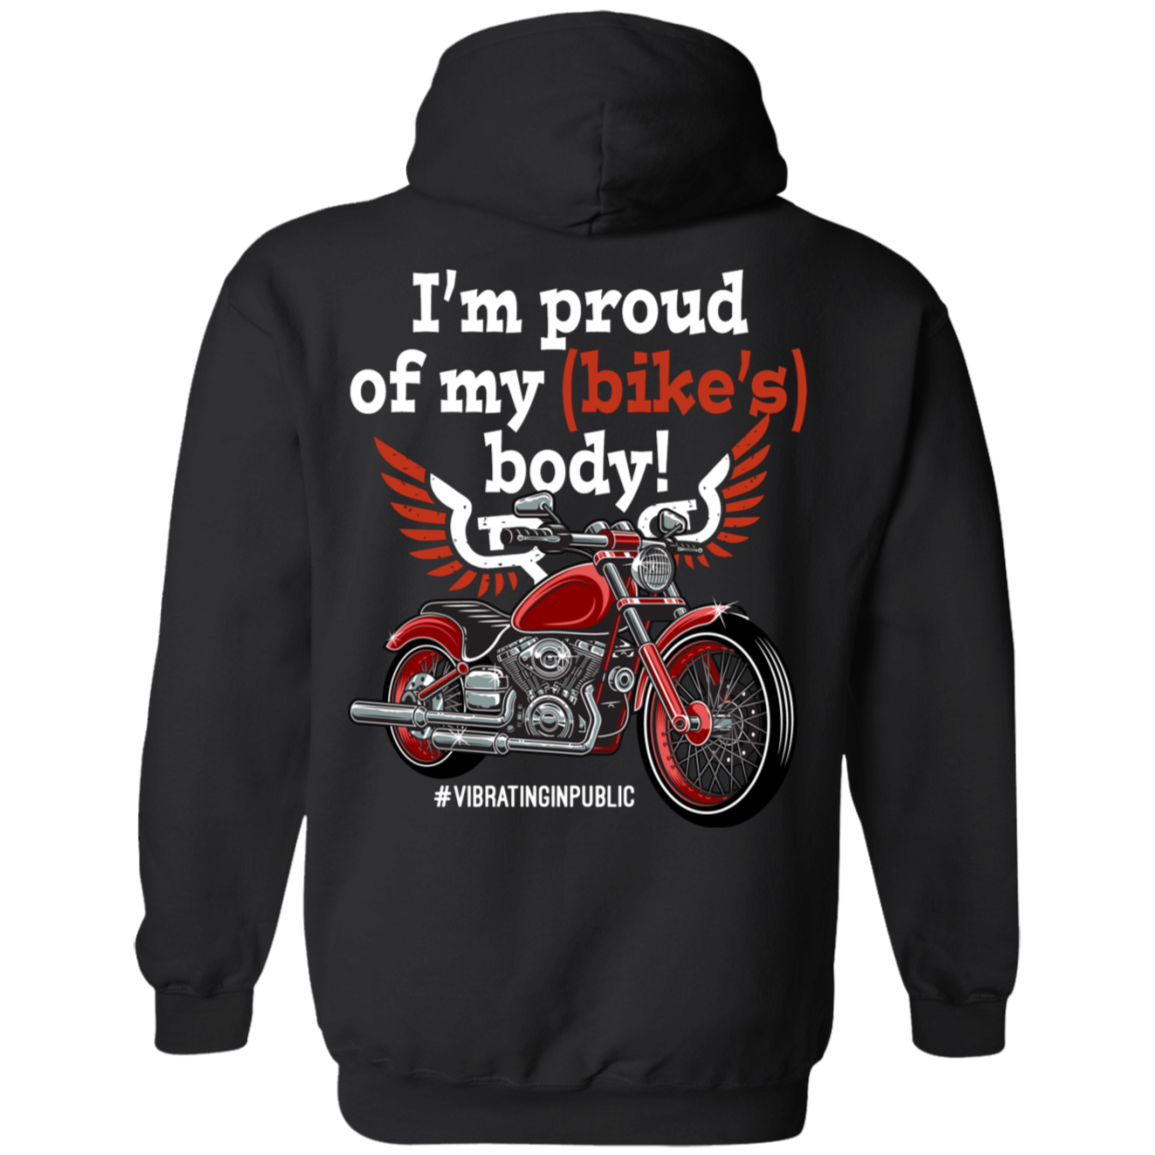 I'm Proud of my Bike's Body Hoodie